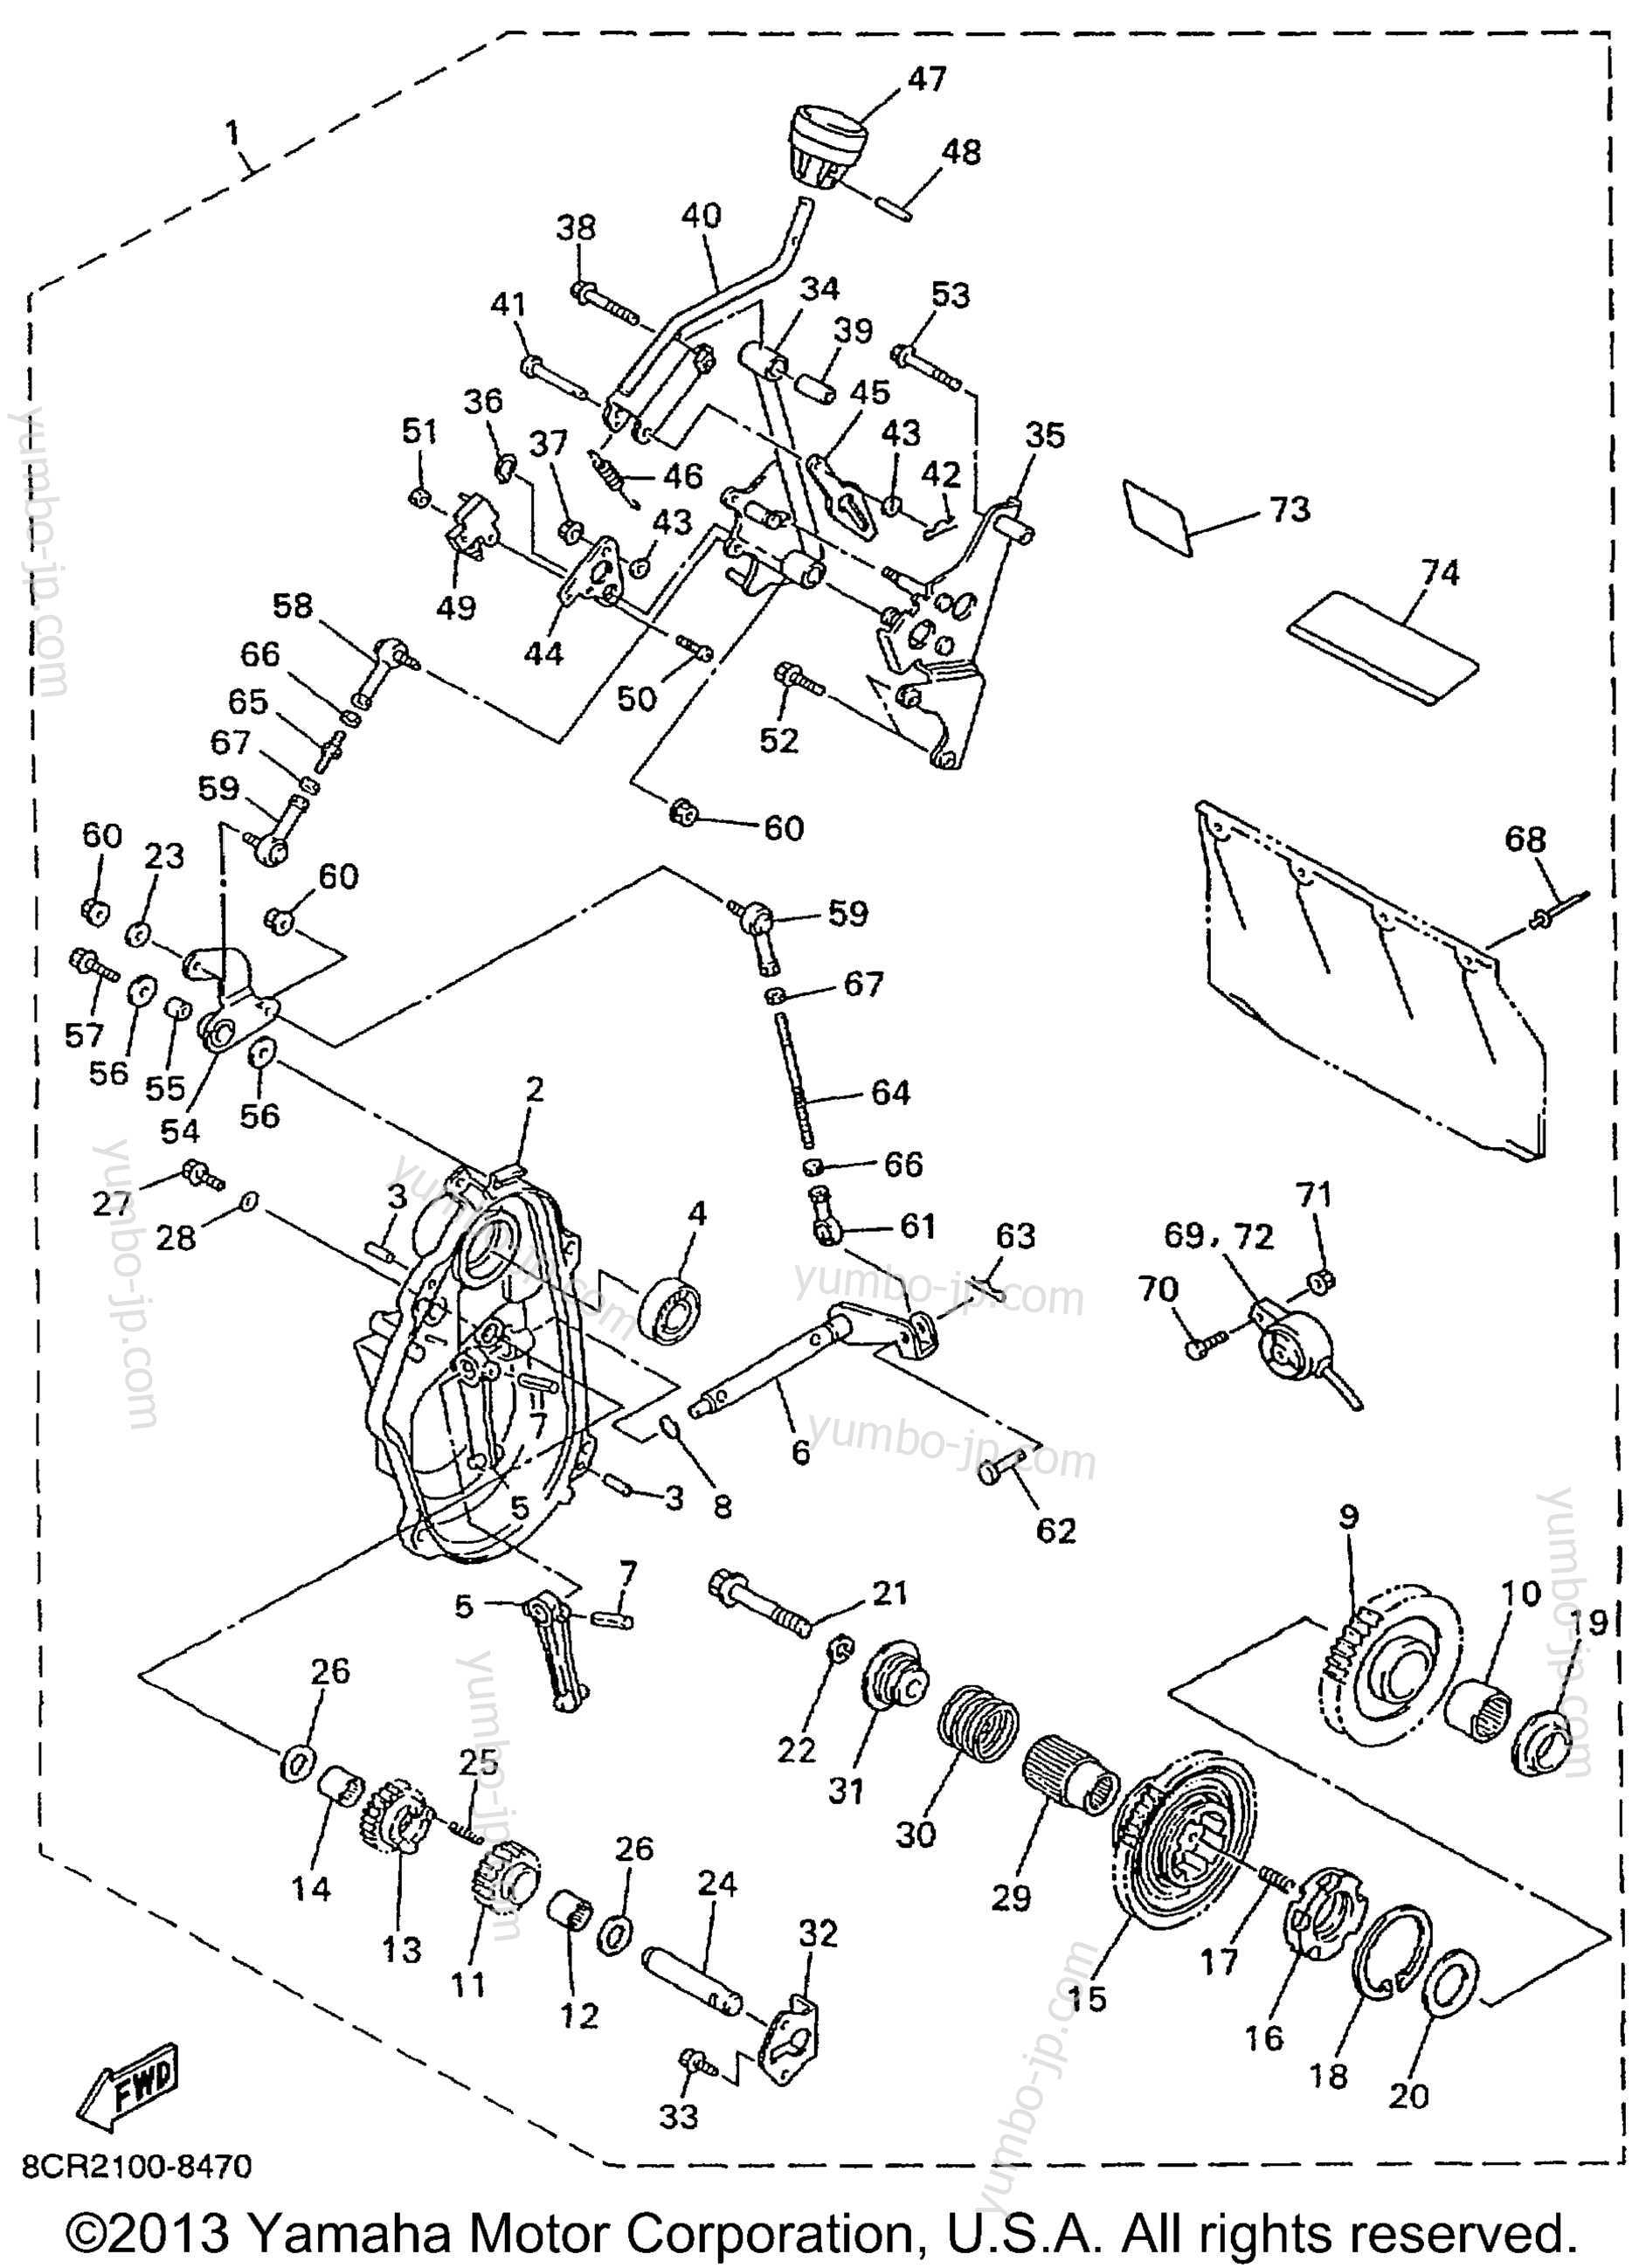 Alternate Reverse Gear Kit for snowmobiles YAMAHA VMAX 700 SX (VX700SXB) 1998 year